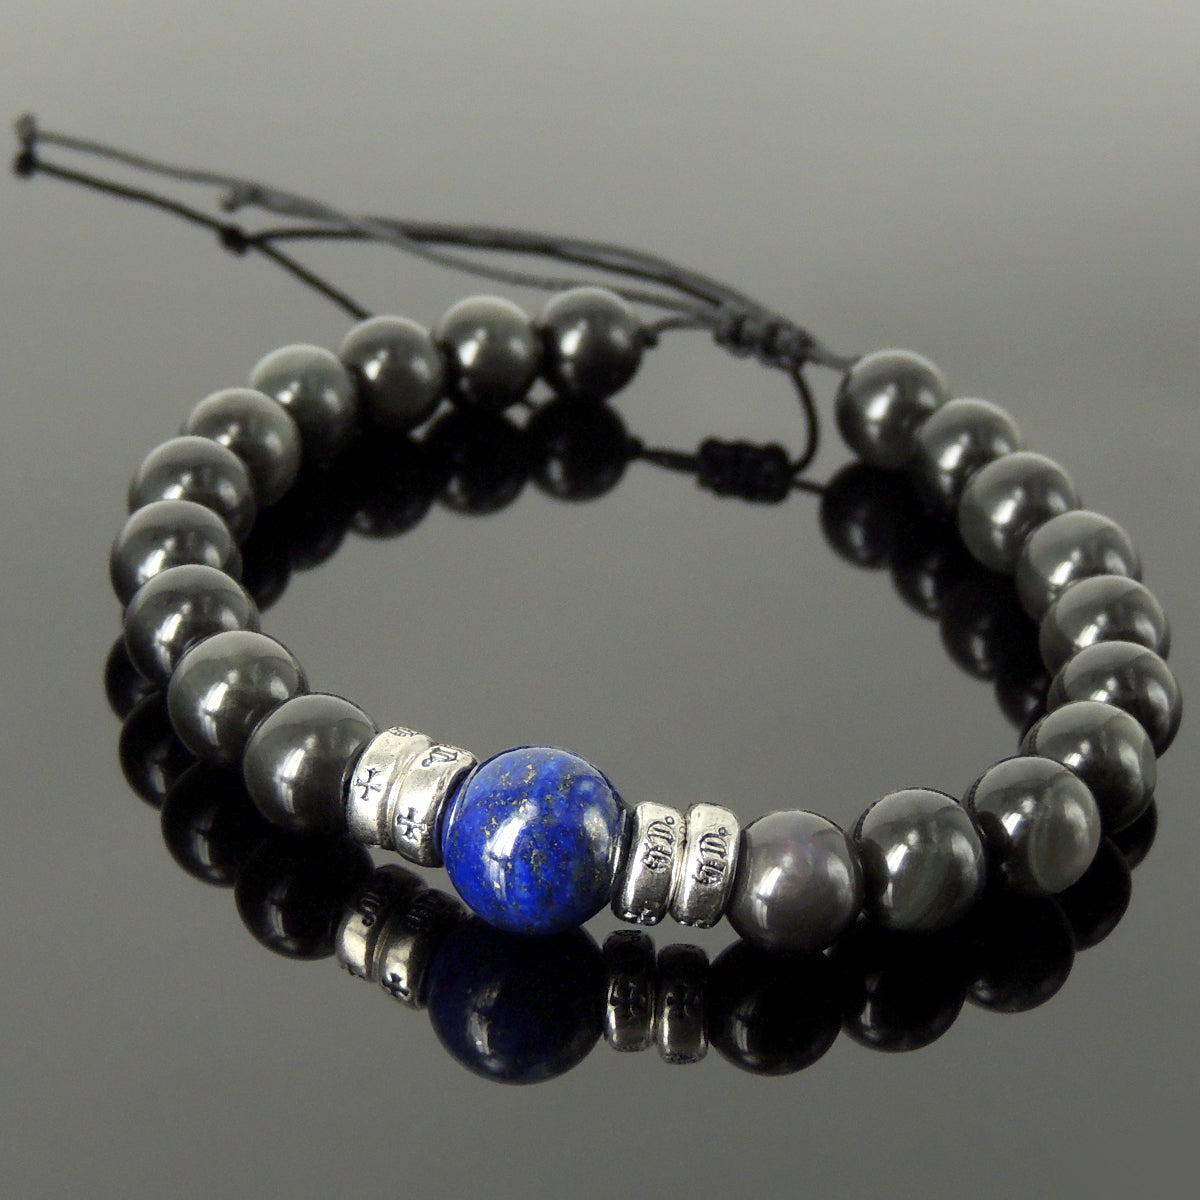 Vintage Celtic Handmade Braided Gemstone Bracelet - Men & Women Healing Casual Wear with Lapis Lazuli, Rainbow Black Obsidian, Adjustable Drawstring, S925 Sterling Silver Spacer Beads BR1690